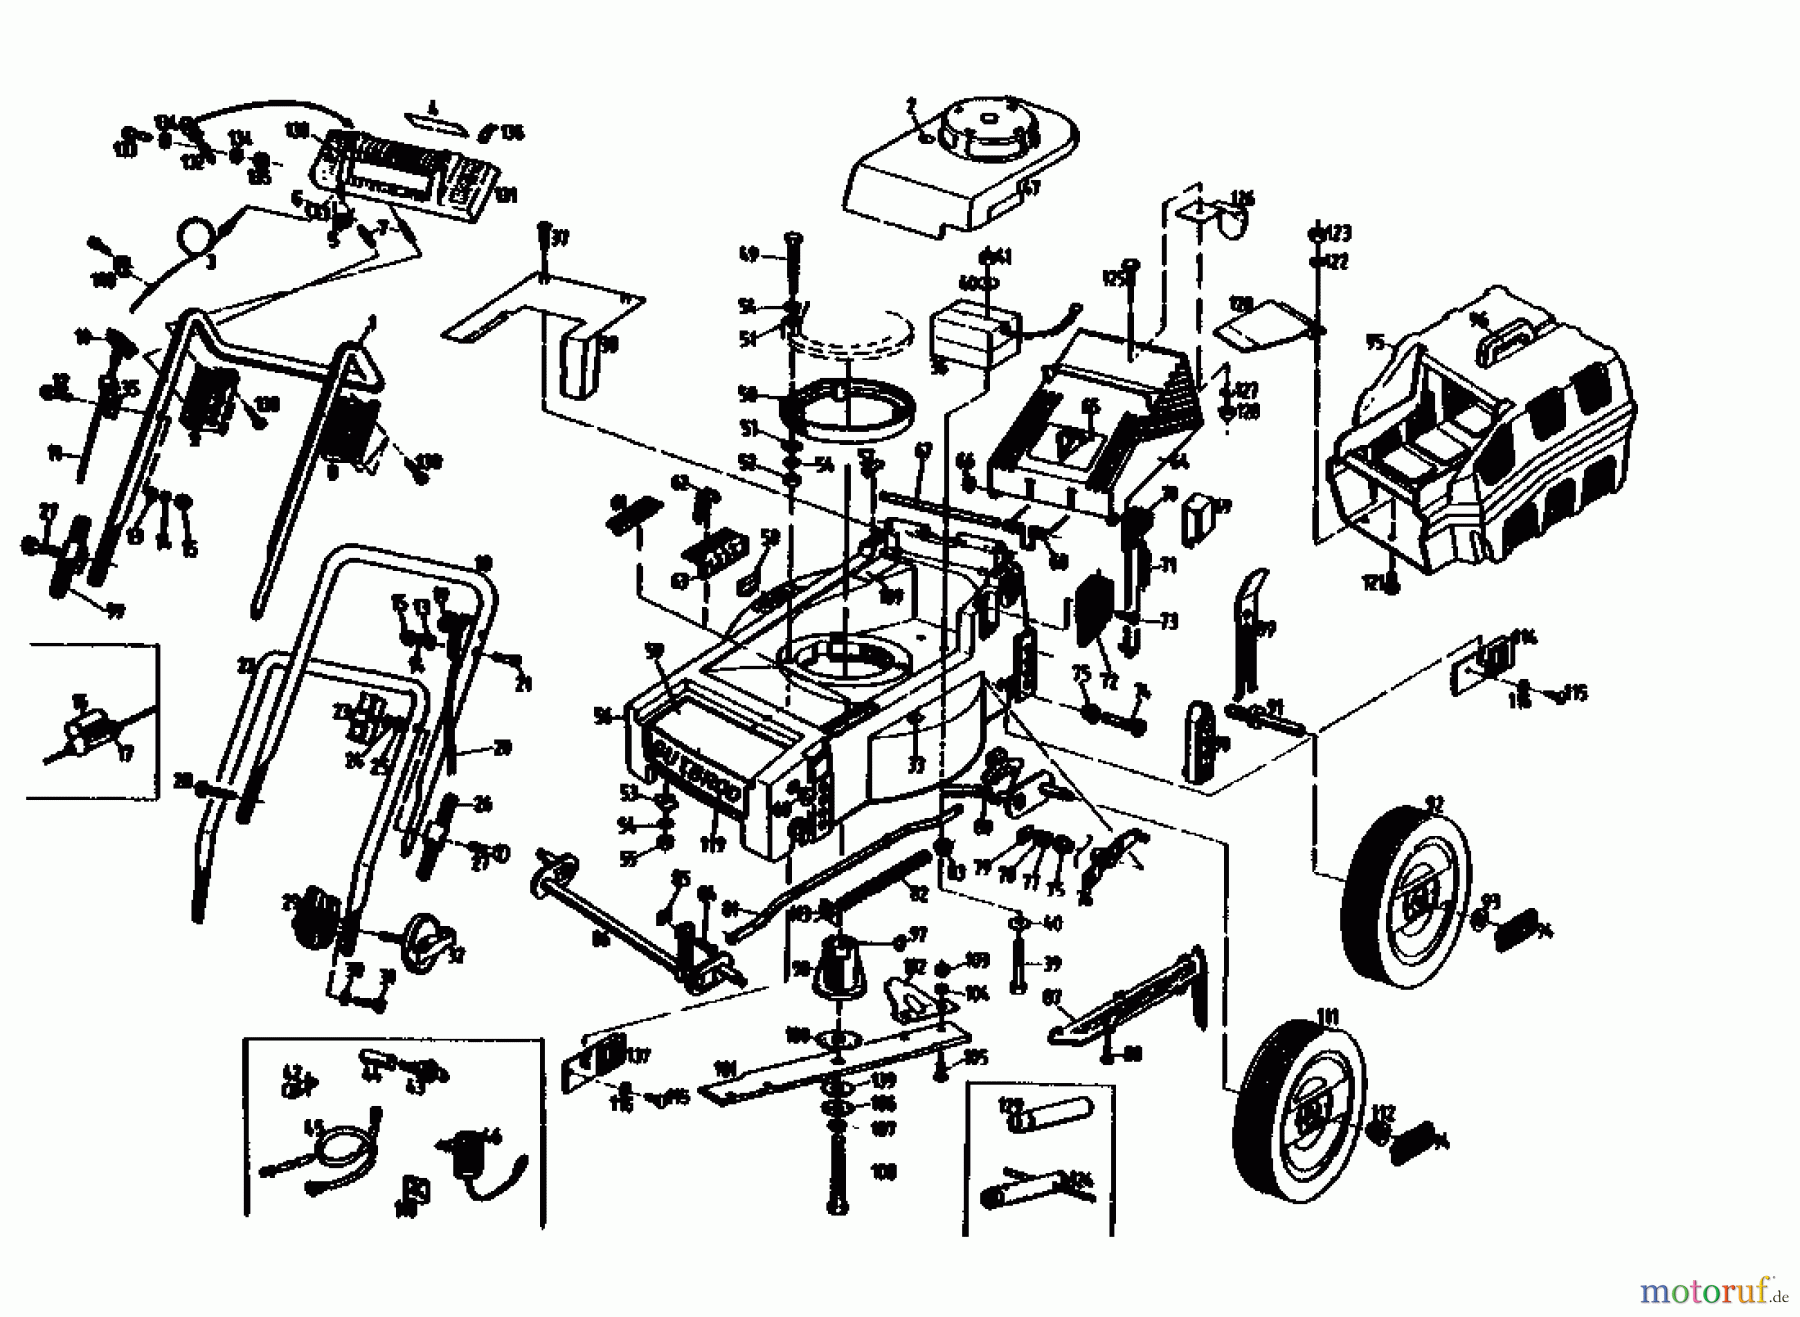  Gutbrod Petrol mower HB 40 BS 02896.04  (1990) Basic machine